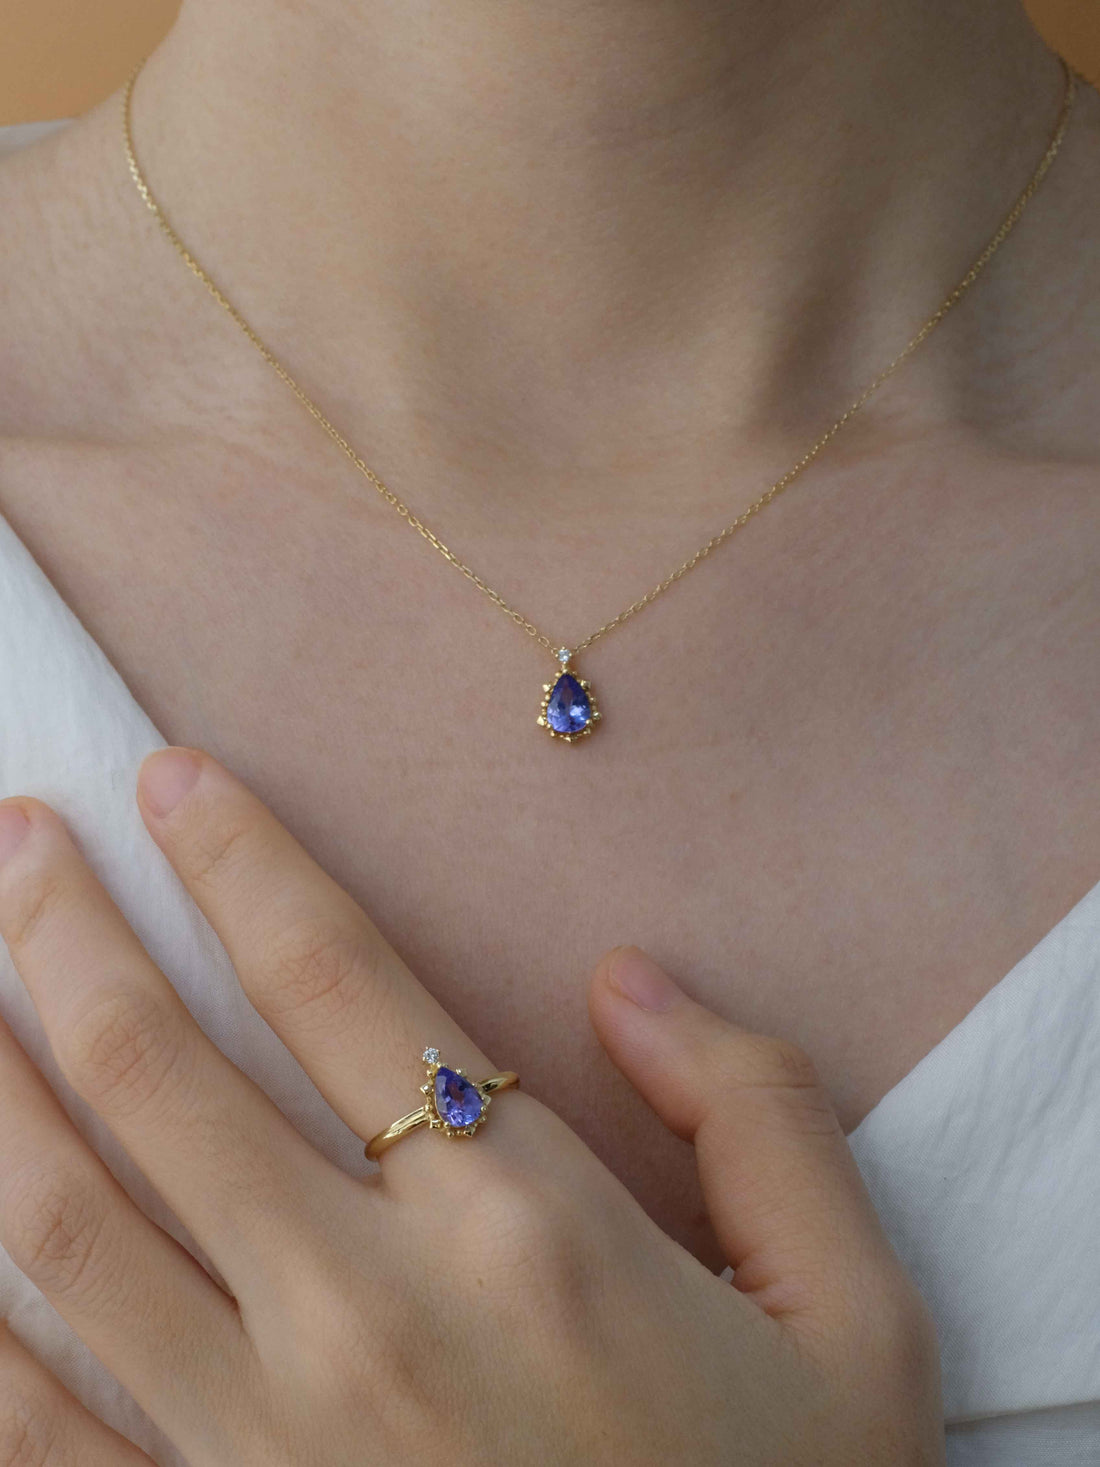 TREASURES Tanzanite Diamond Necklace, 18k solid gold